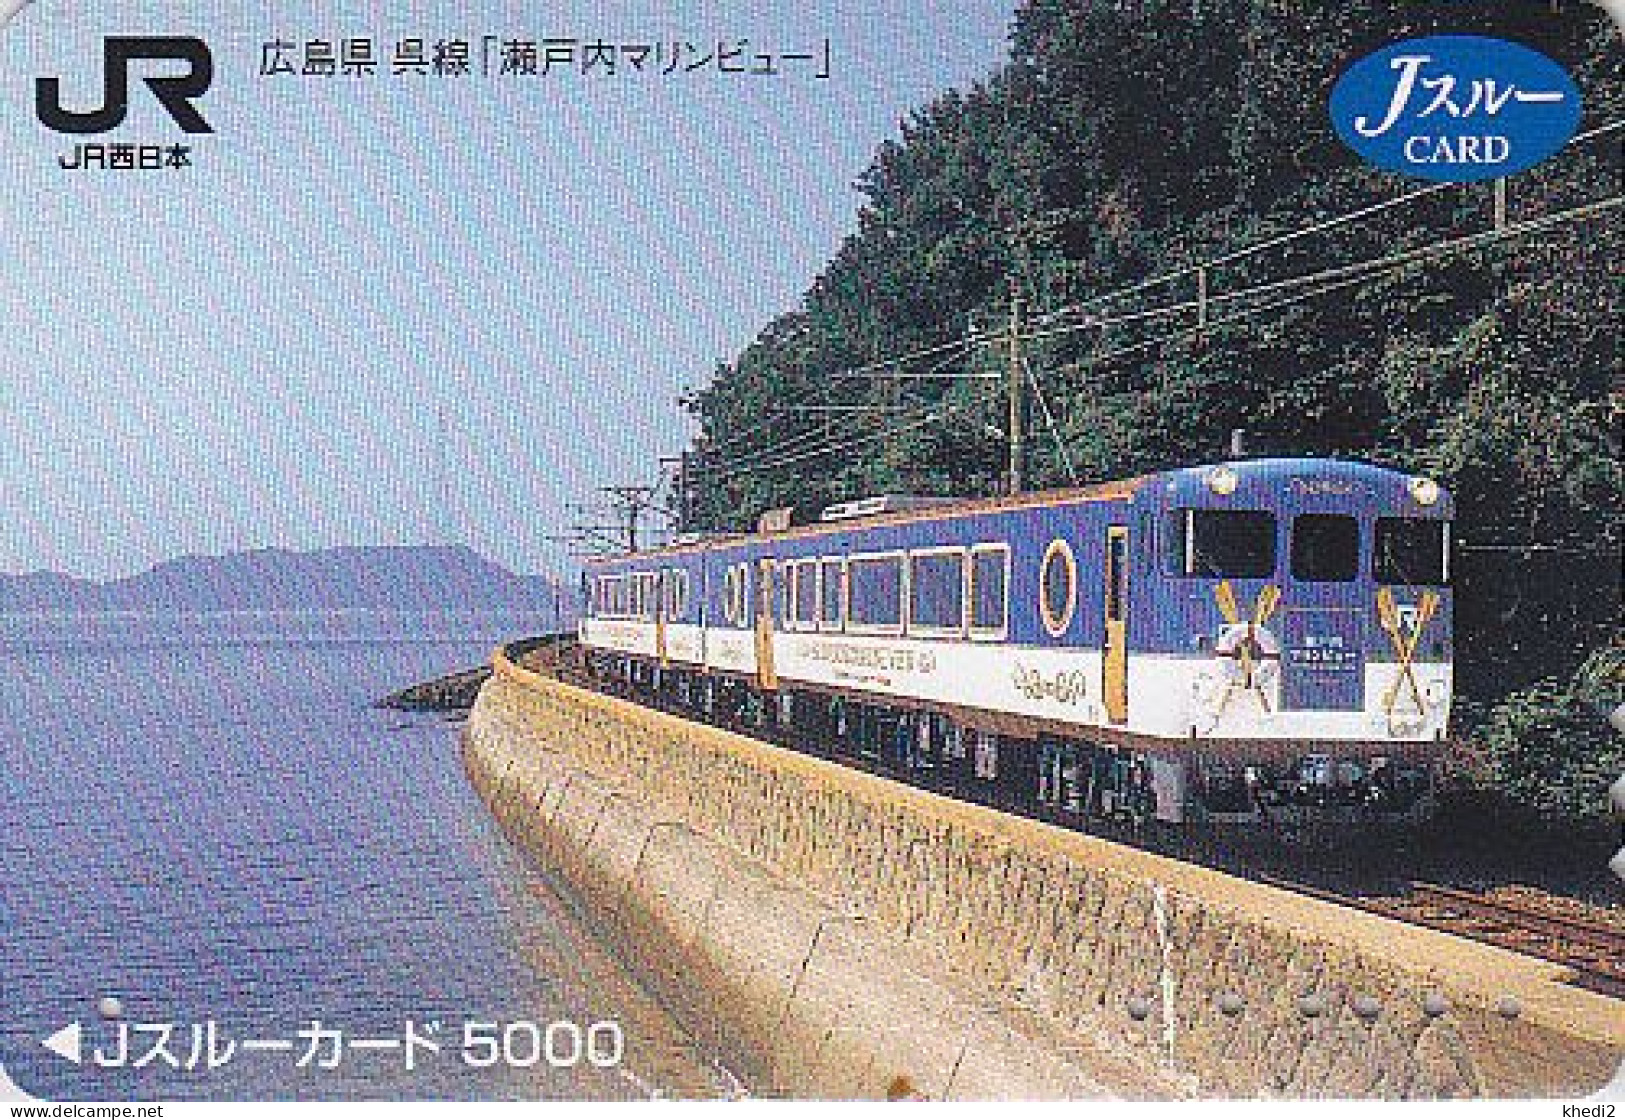 Carte Prépayée JAPON - TRAIN Décoré Bord De Mer Sea Side - JAPAN Prepaid JR J Card - ZUG Eisenbahn - TREIN - 3777 - Treni